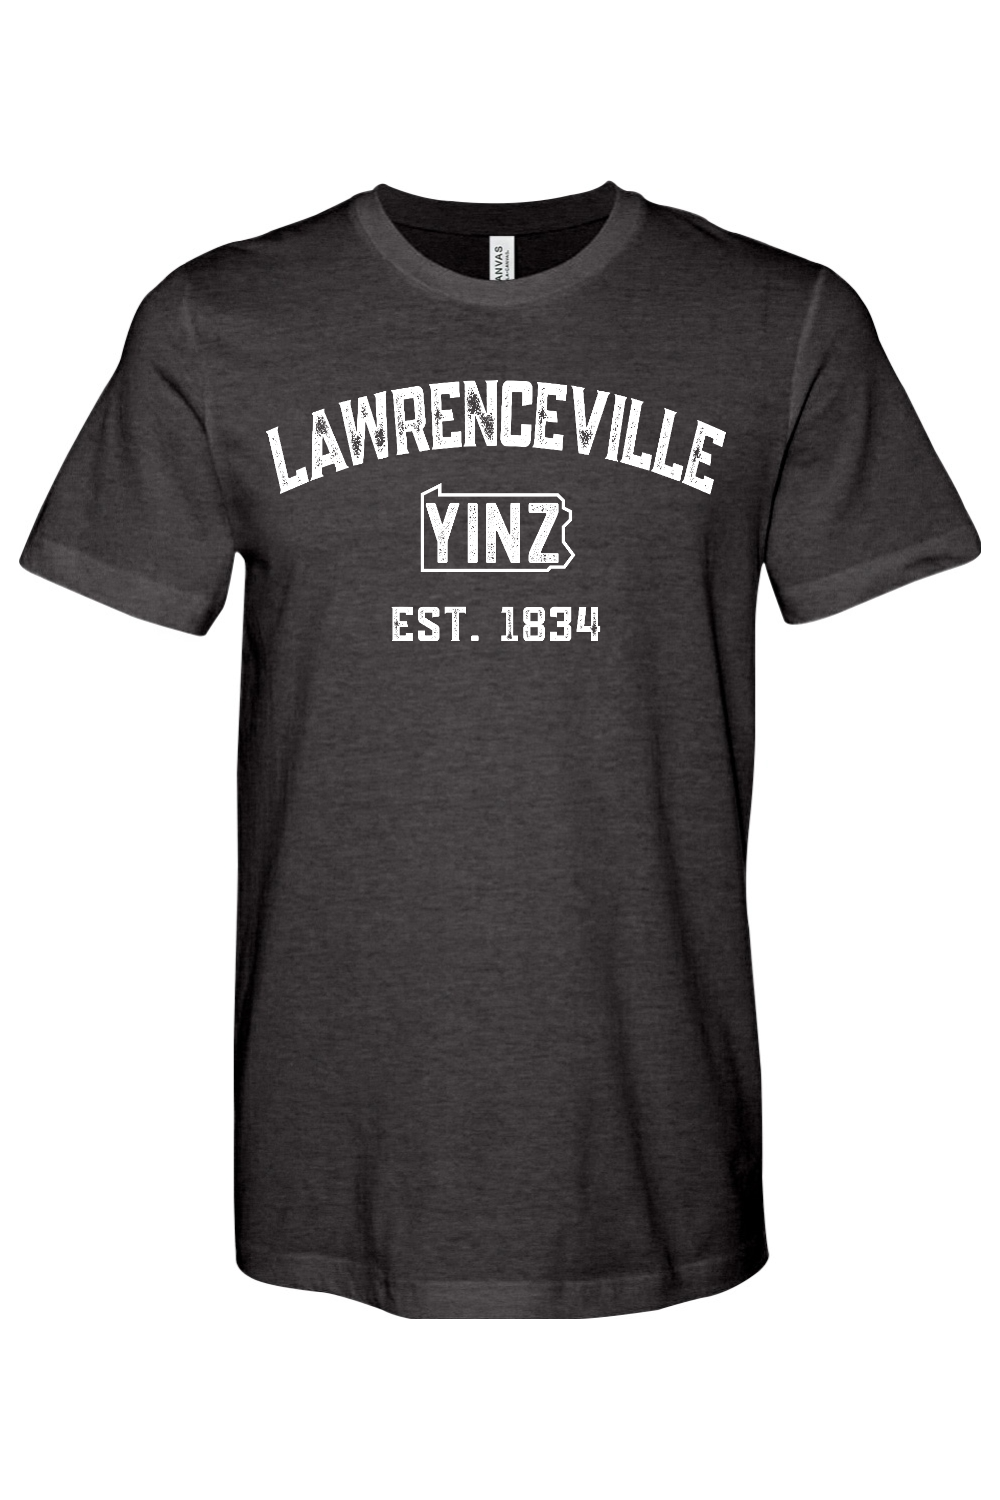 Lawrenceville Yinzylvania - Yinzylvania